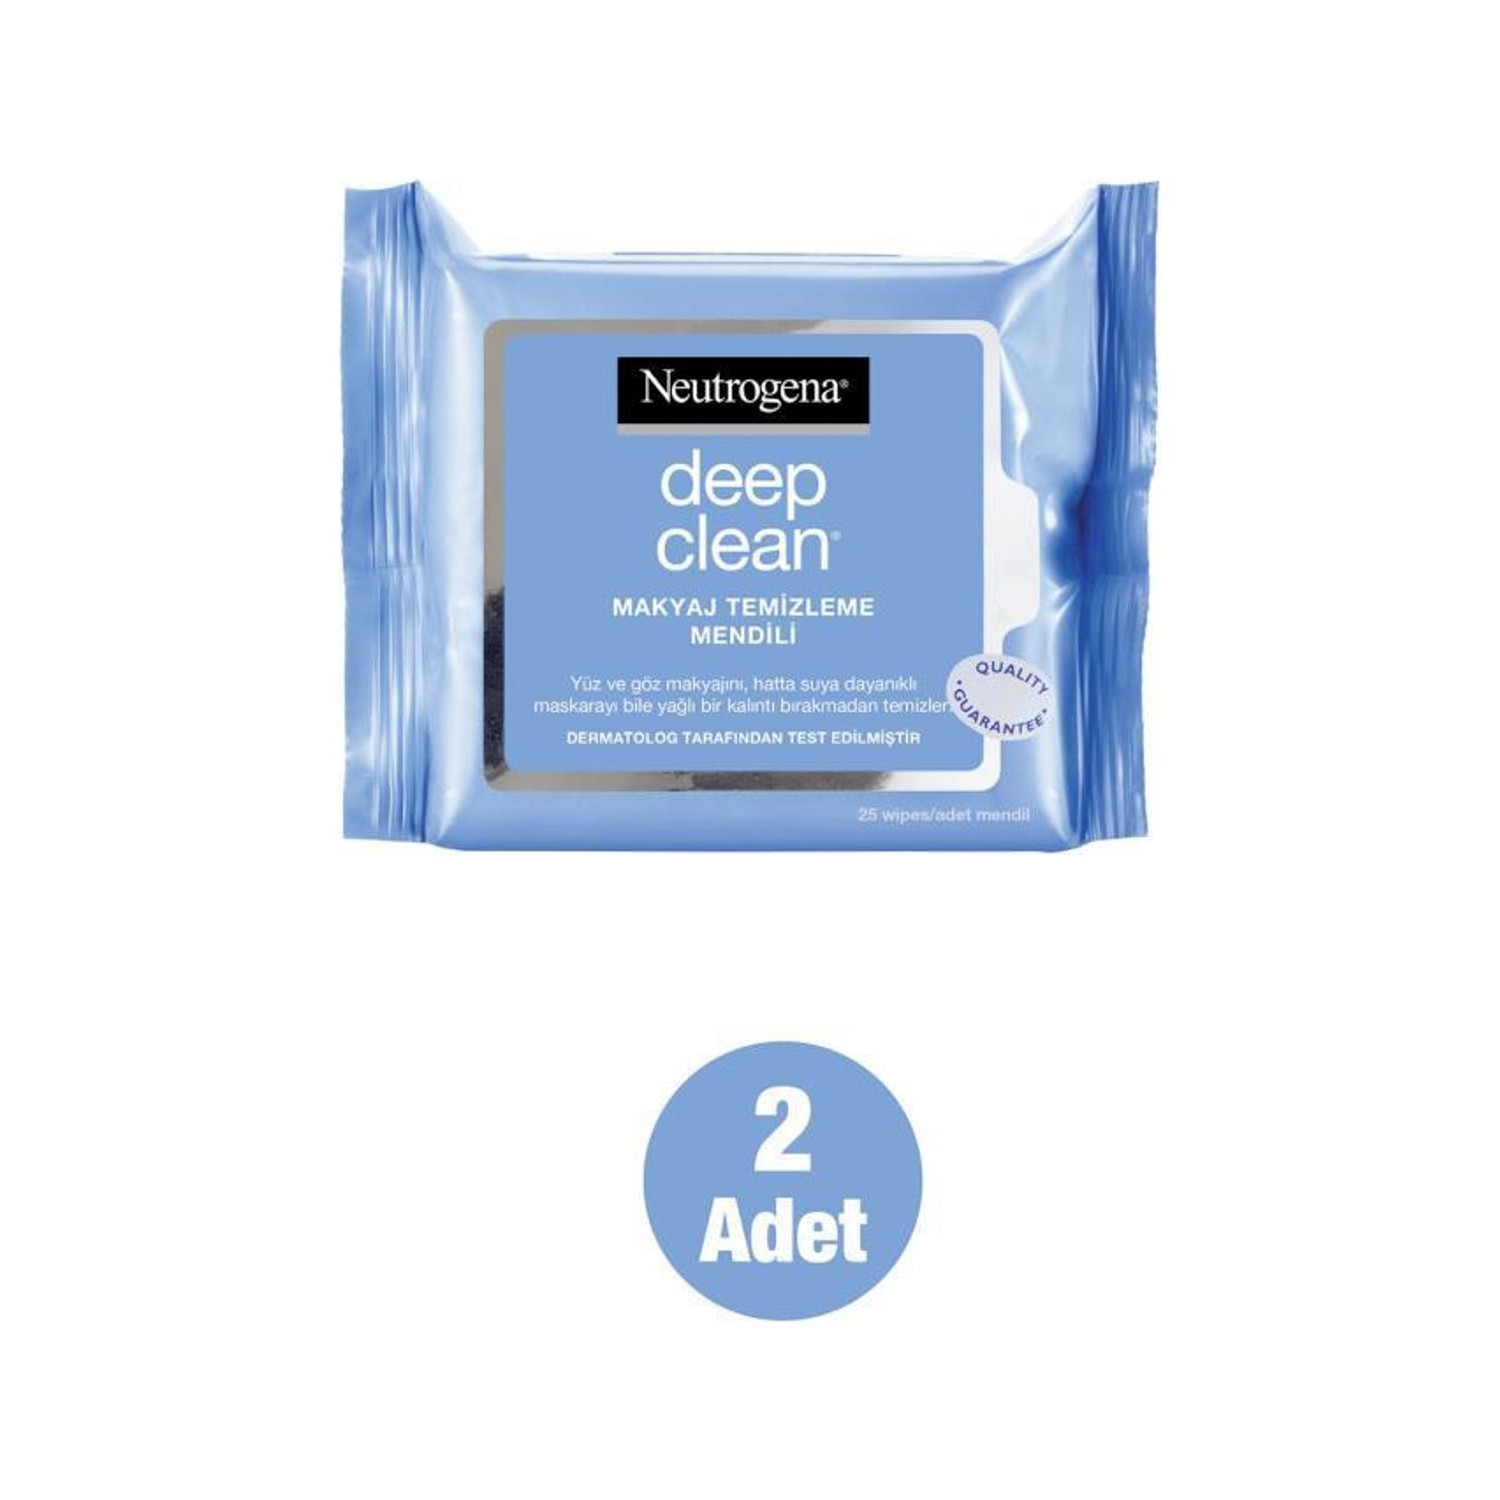 Салфетки для снятия макияжа Neutrogena Deep Clean, 2 упаковки по, 25 салфеток салфетка для снятия макияжа neutrogena deep clean 25 листов